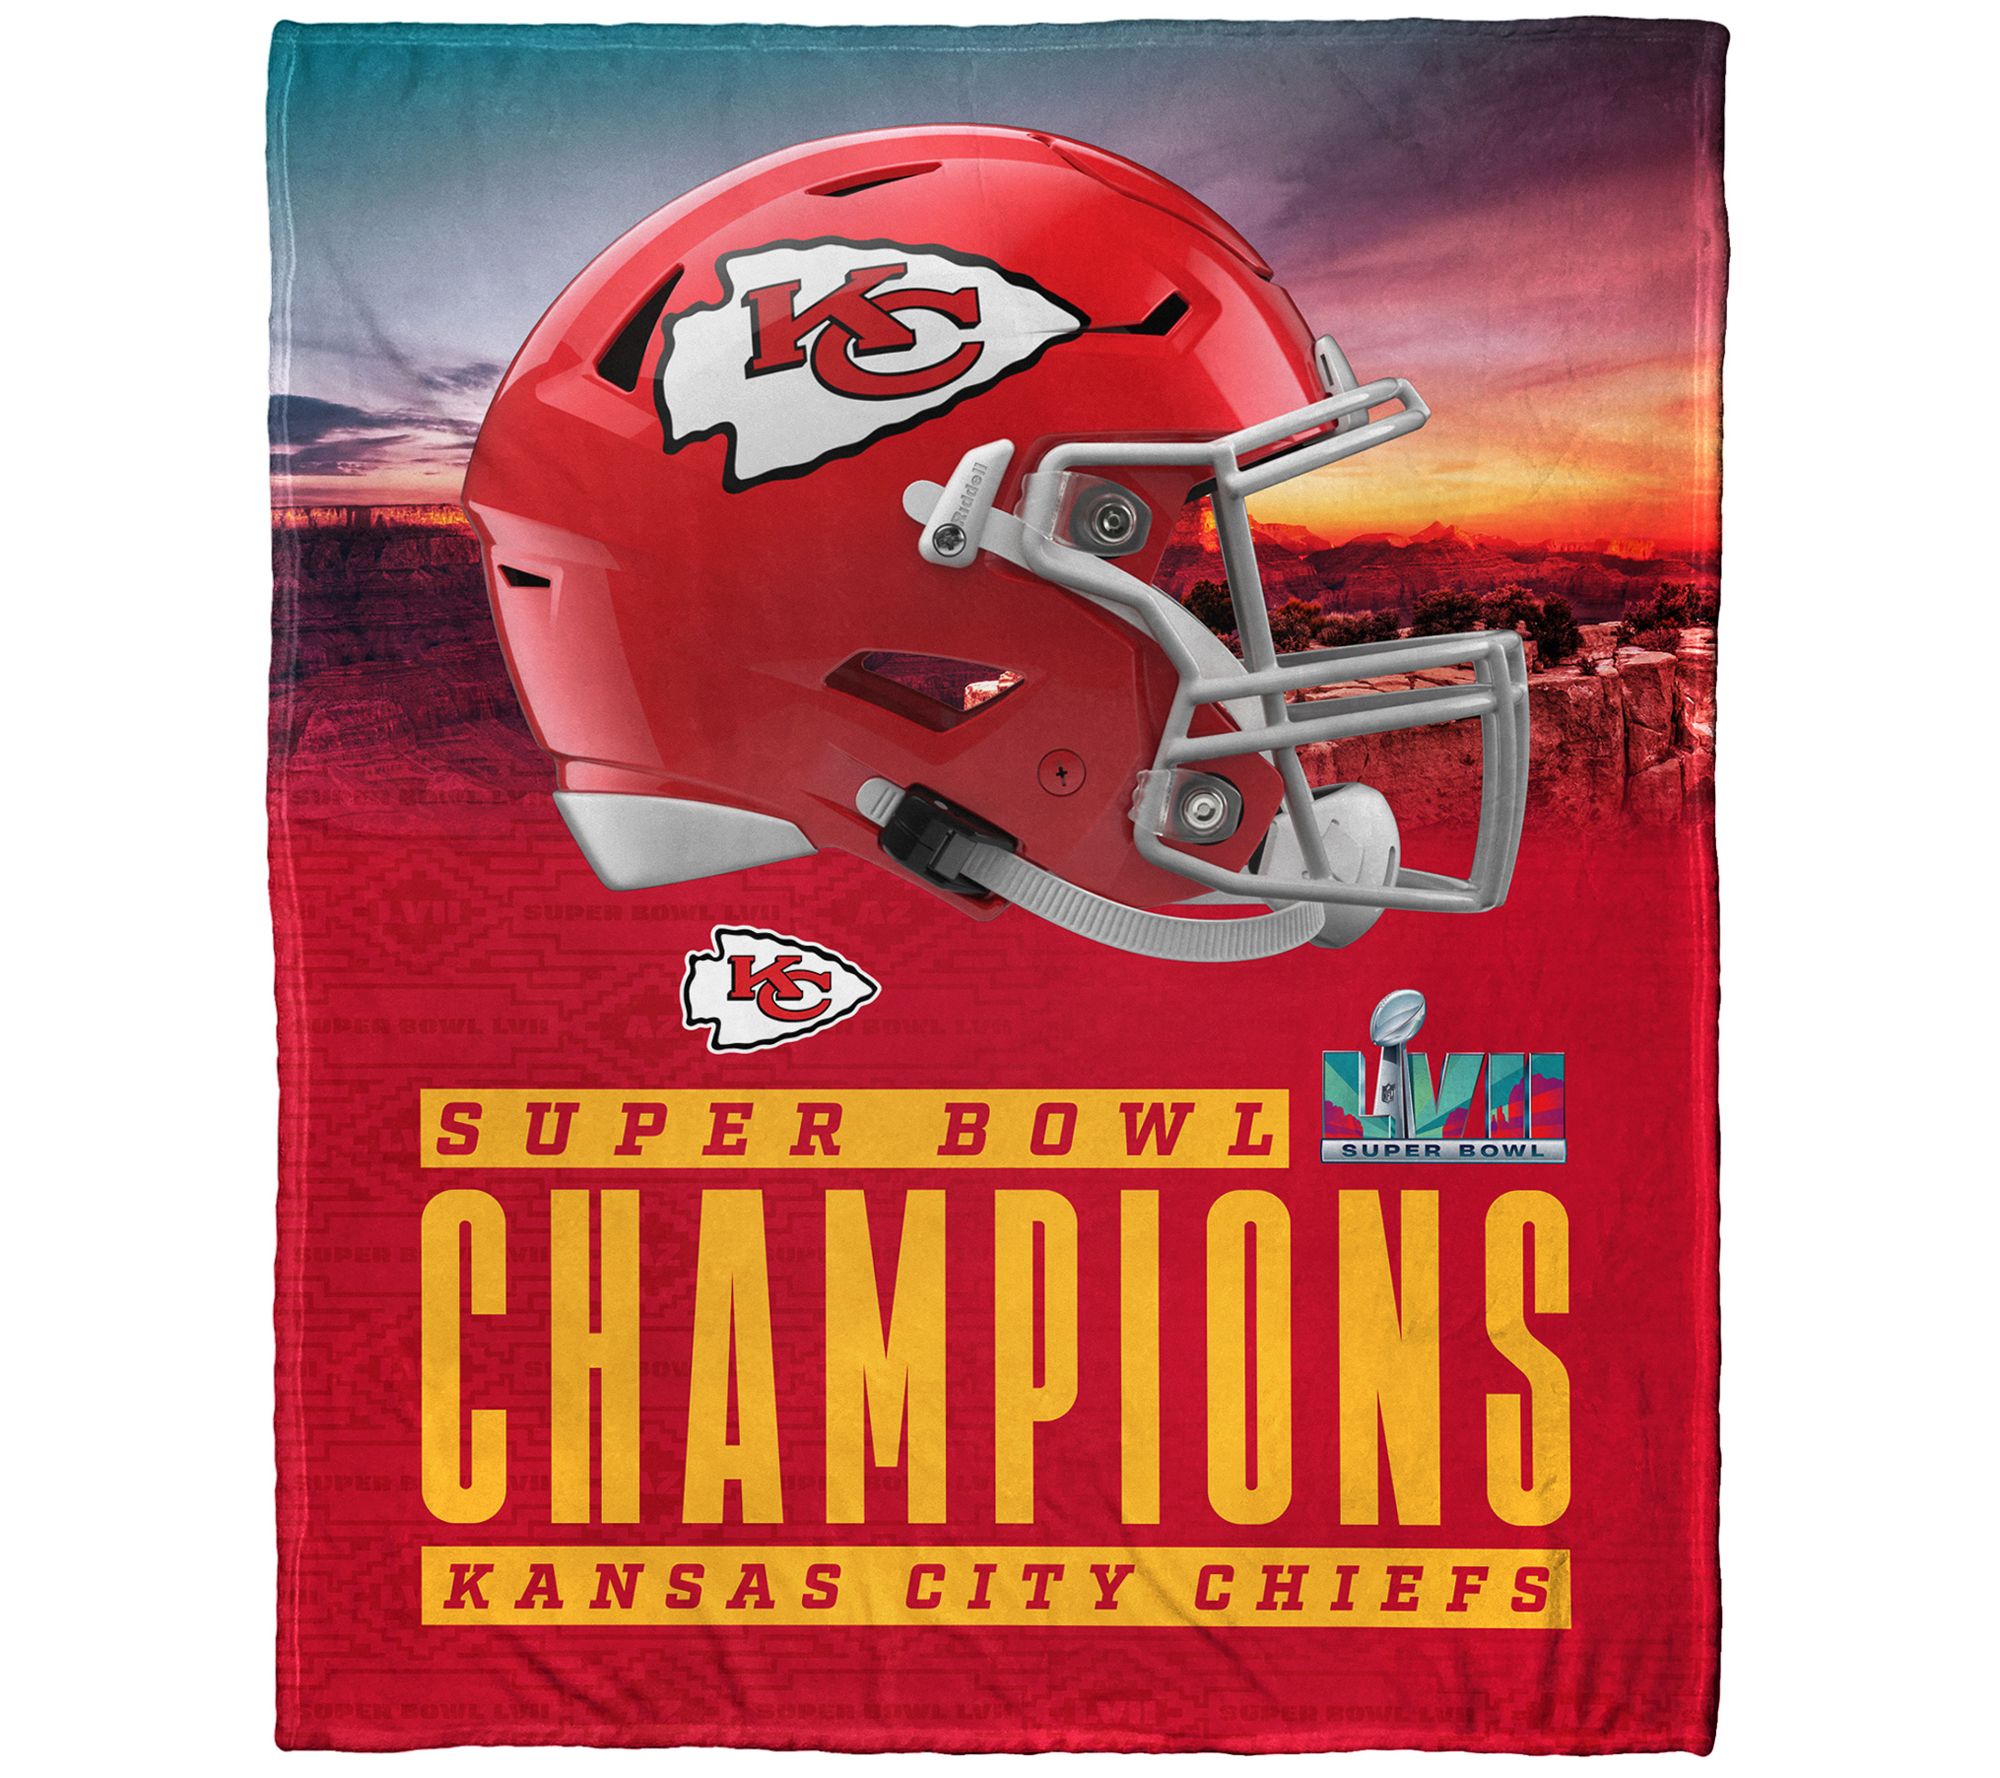 Kansas City Chiefs, Super Bowl LVII Champions Framed Print by